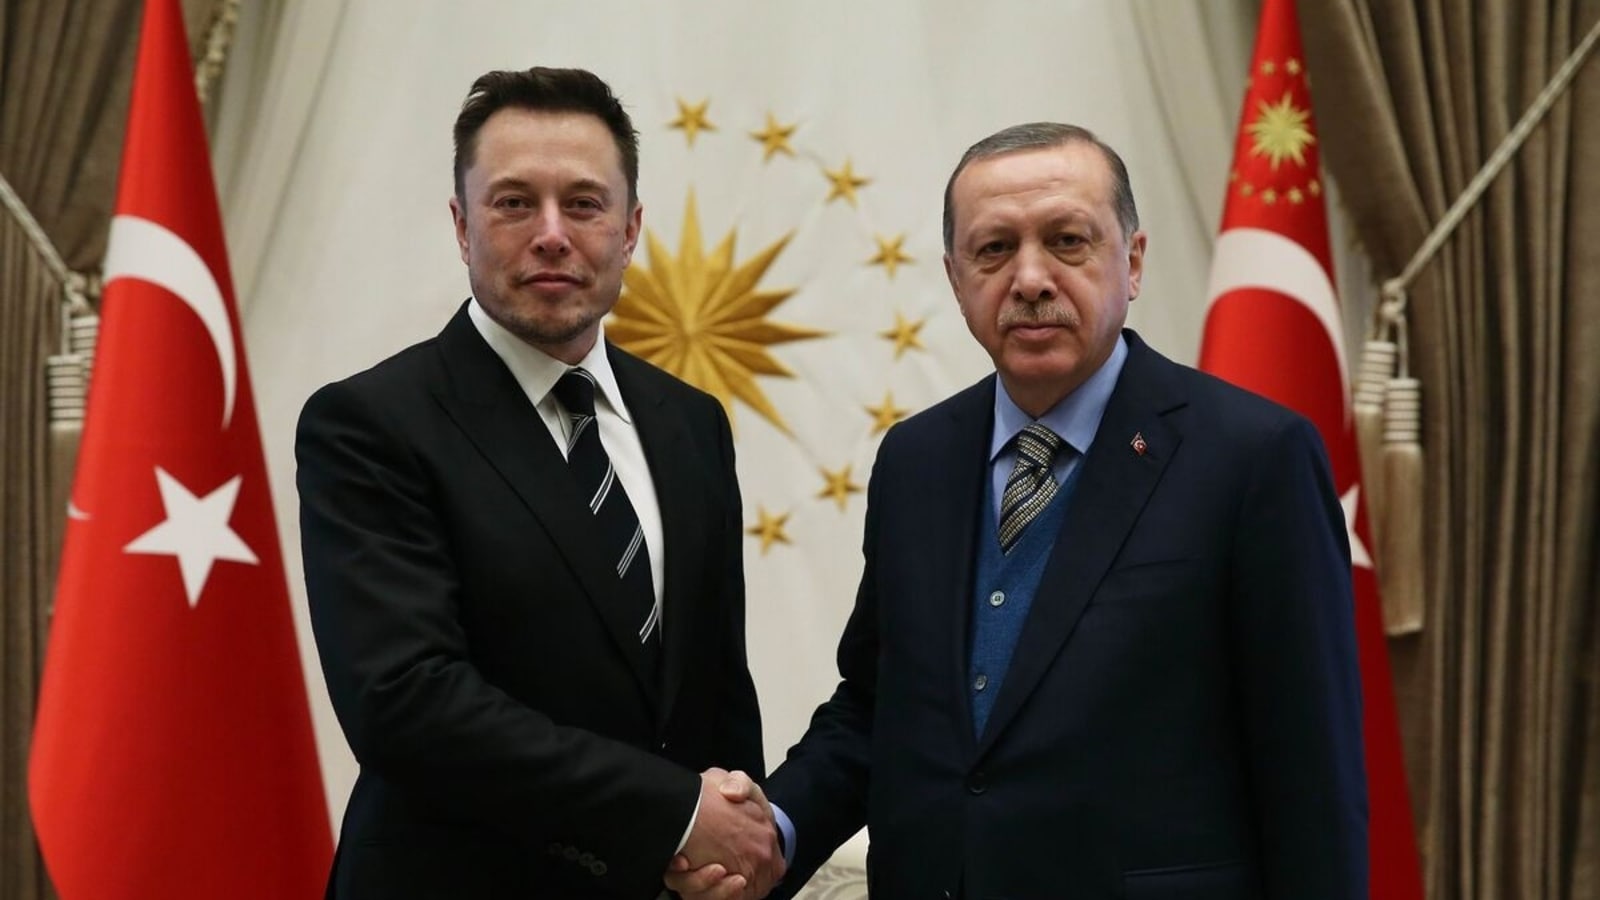 Musk commits to attend President Erdogan’s technology festival